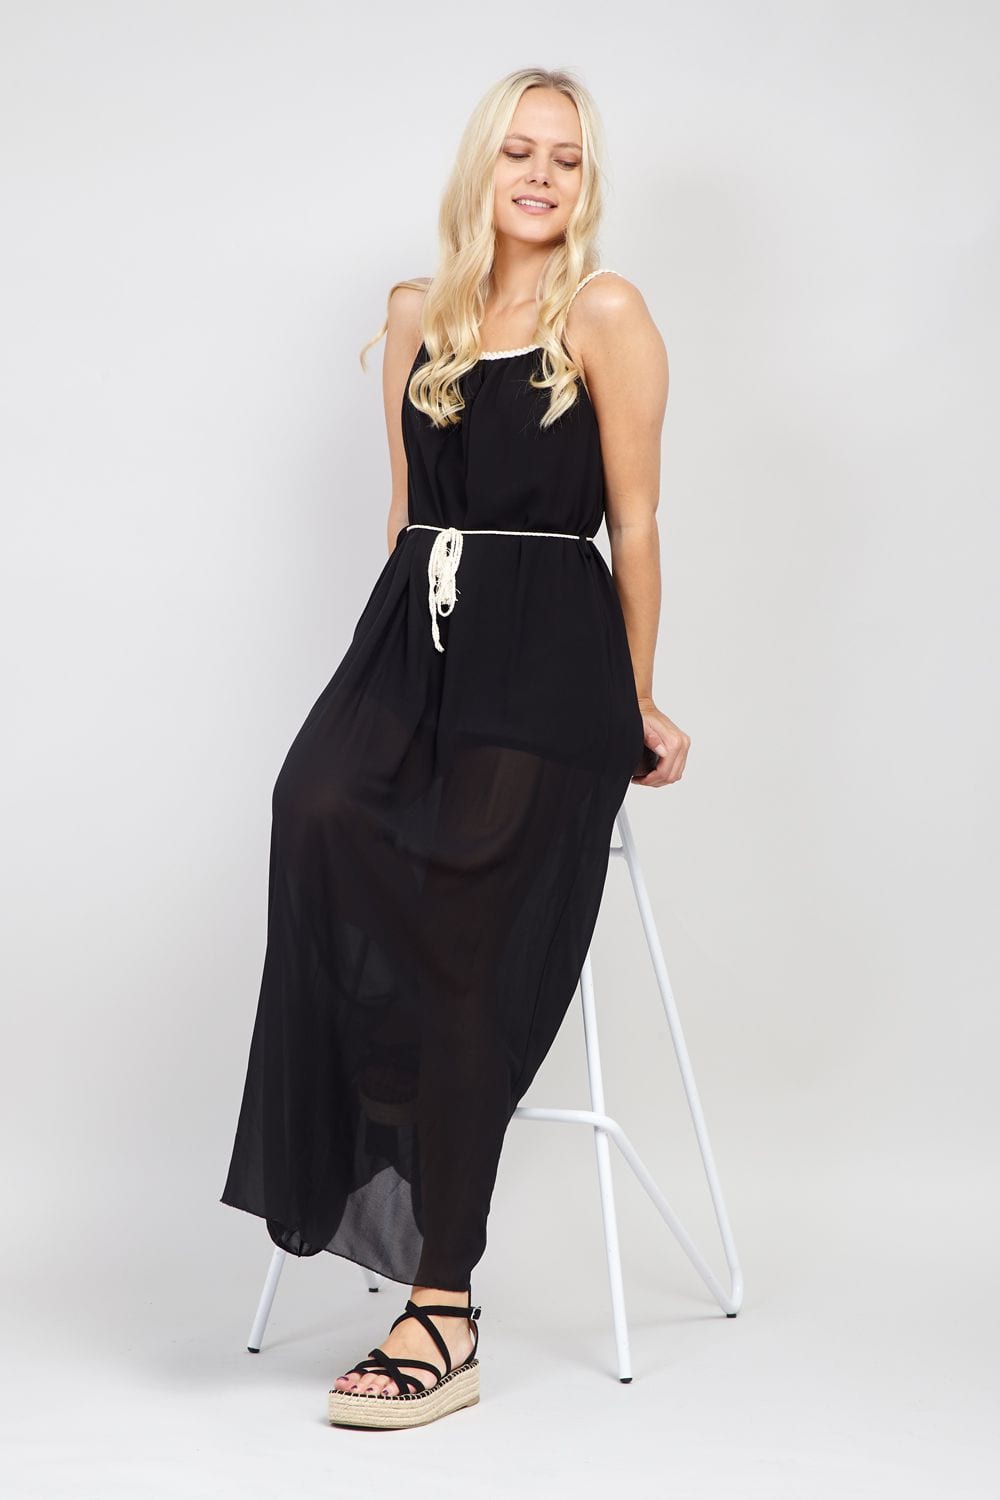 Black | Tie Waist Grecian Dress